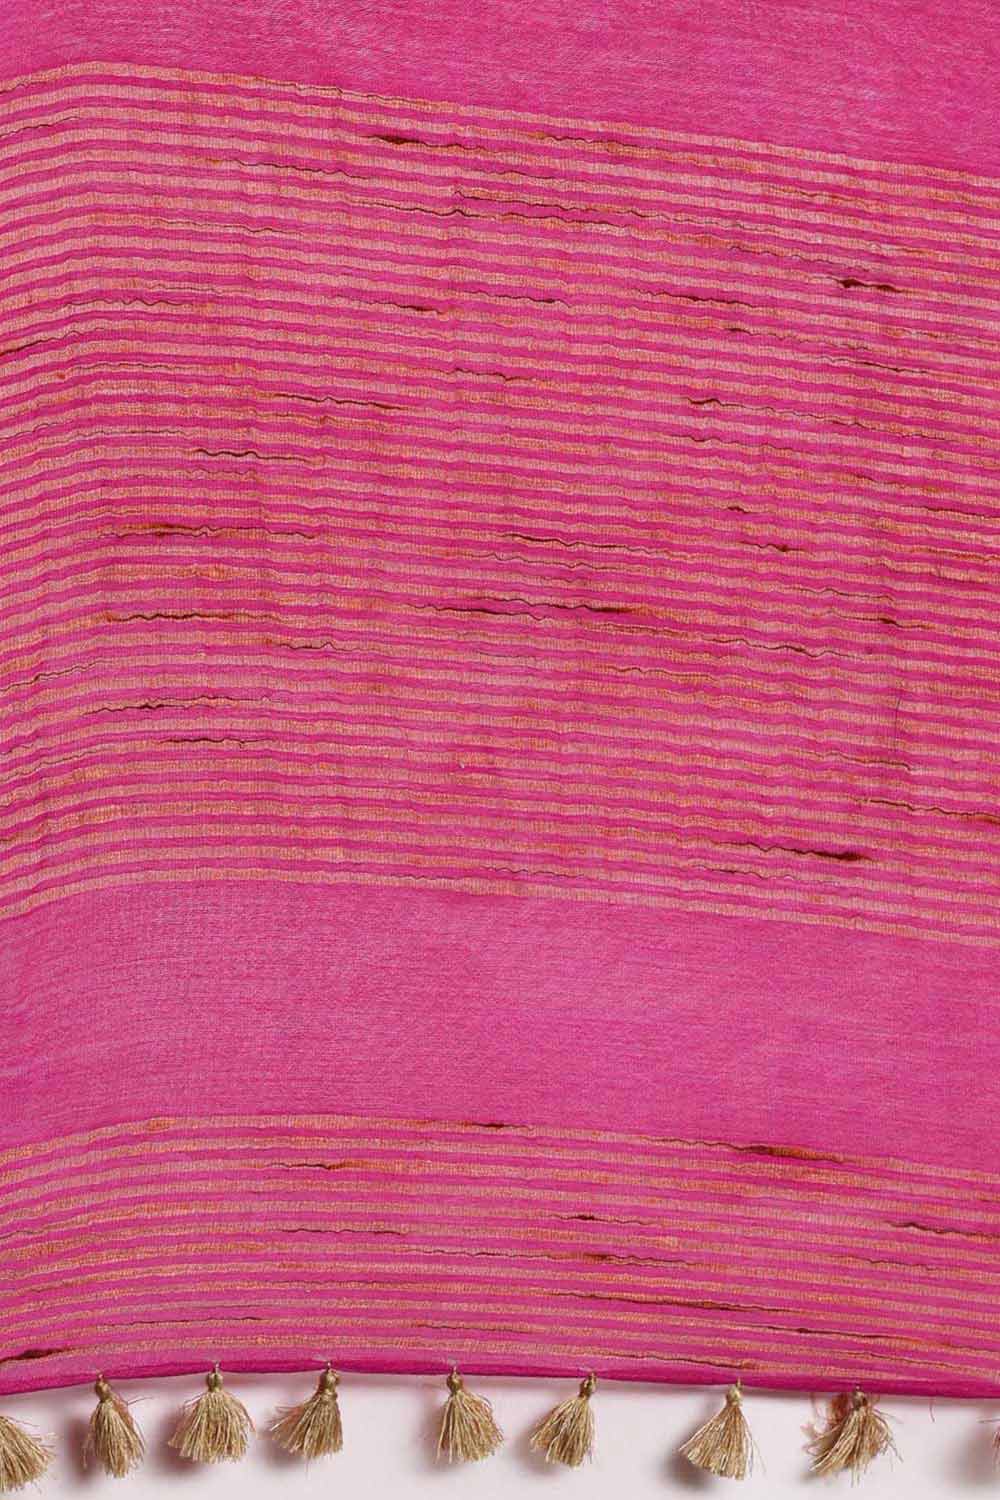 Buy Pink Zari Woven Silk Blend One Minute Saree Online - Side